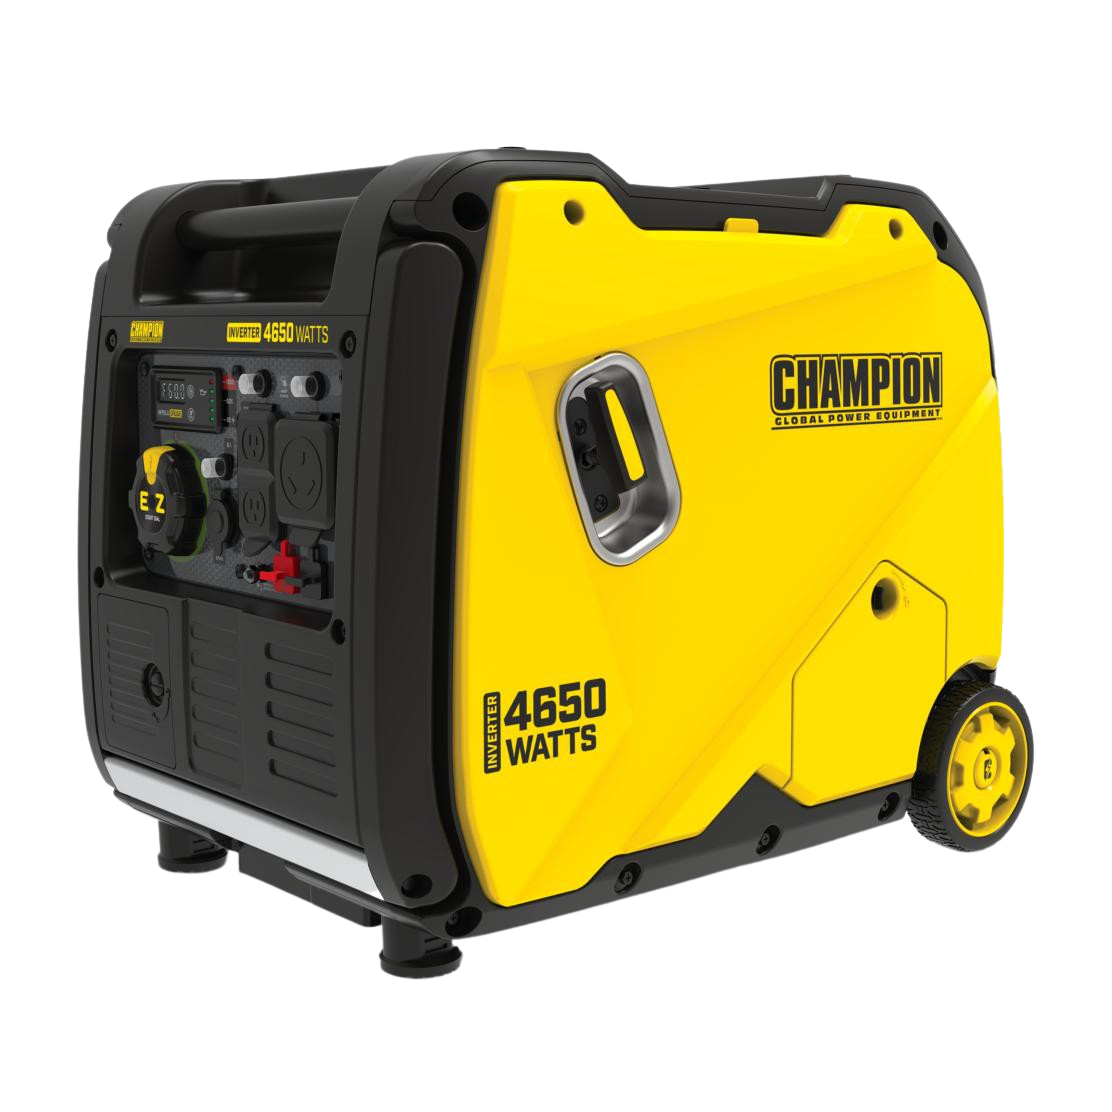 Champion, Champion 200992 3650W/4650W Recoil Start Portable Gas Inverter Generator Manufacturer RFB